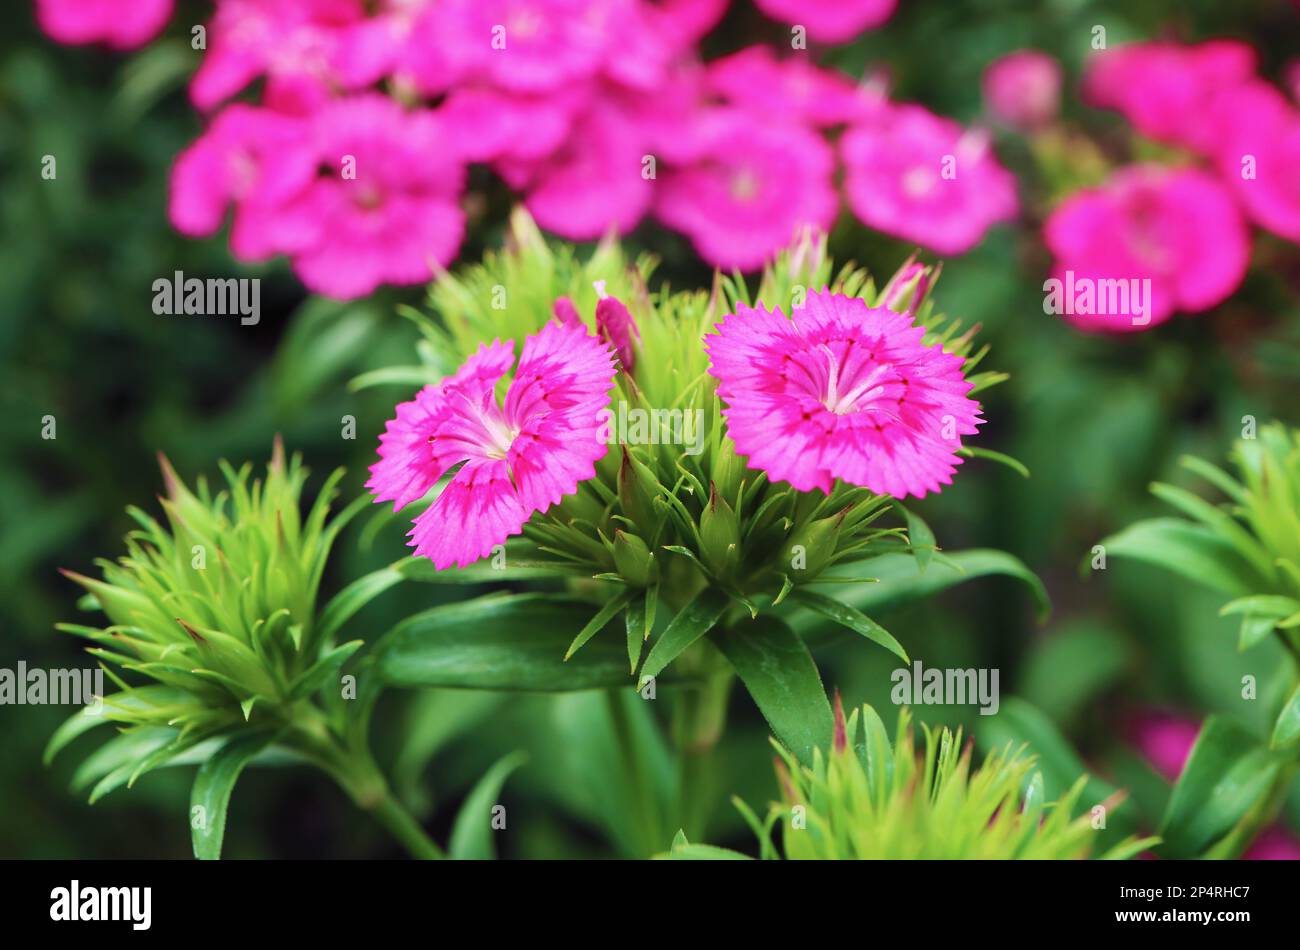 A Pair of Stunning Dianthus Seguieri or Sequier's Pink Flowers Growing in the Garden Stock Photo